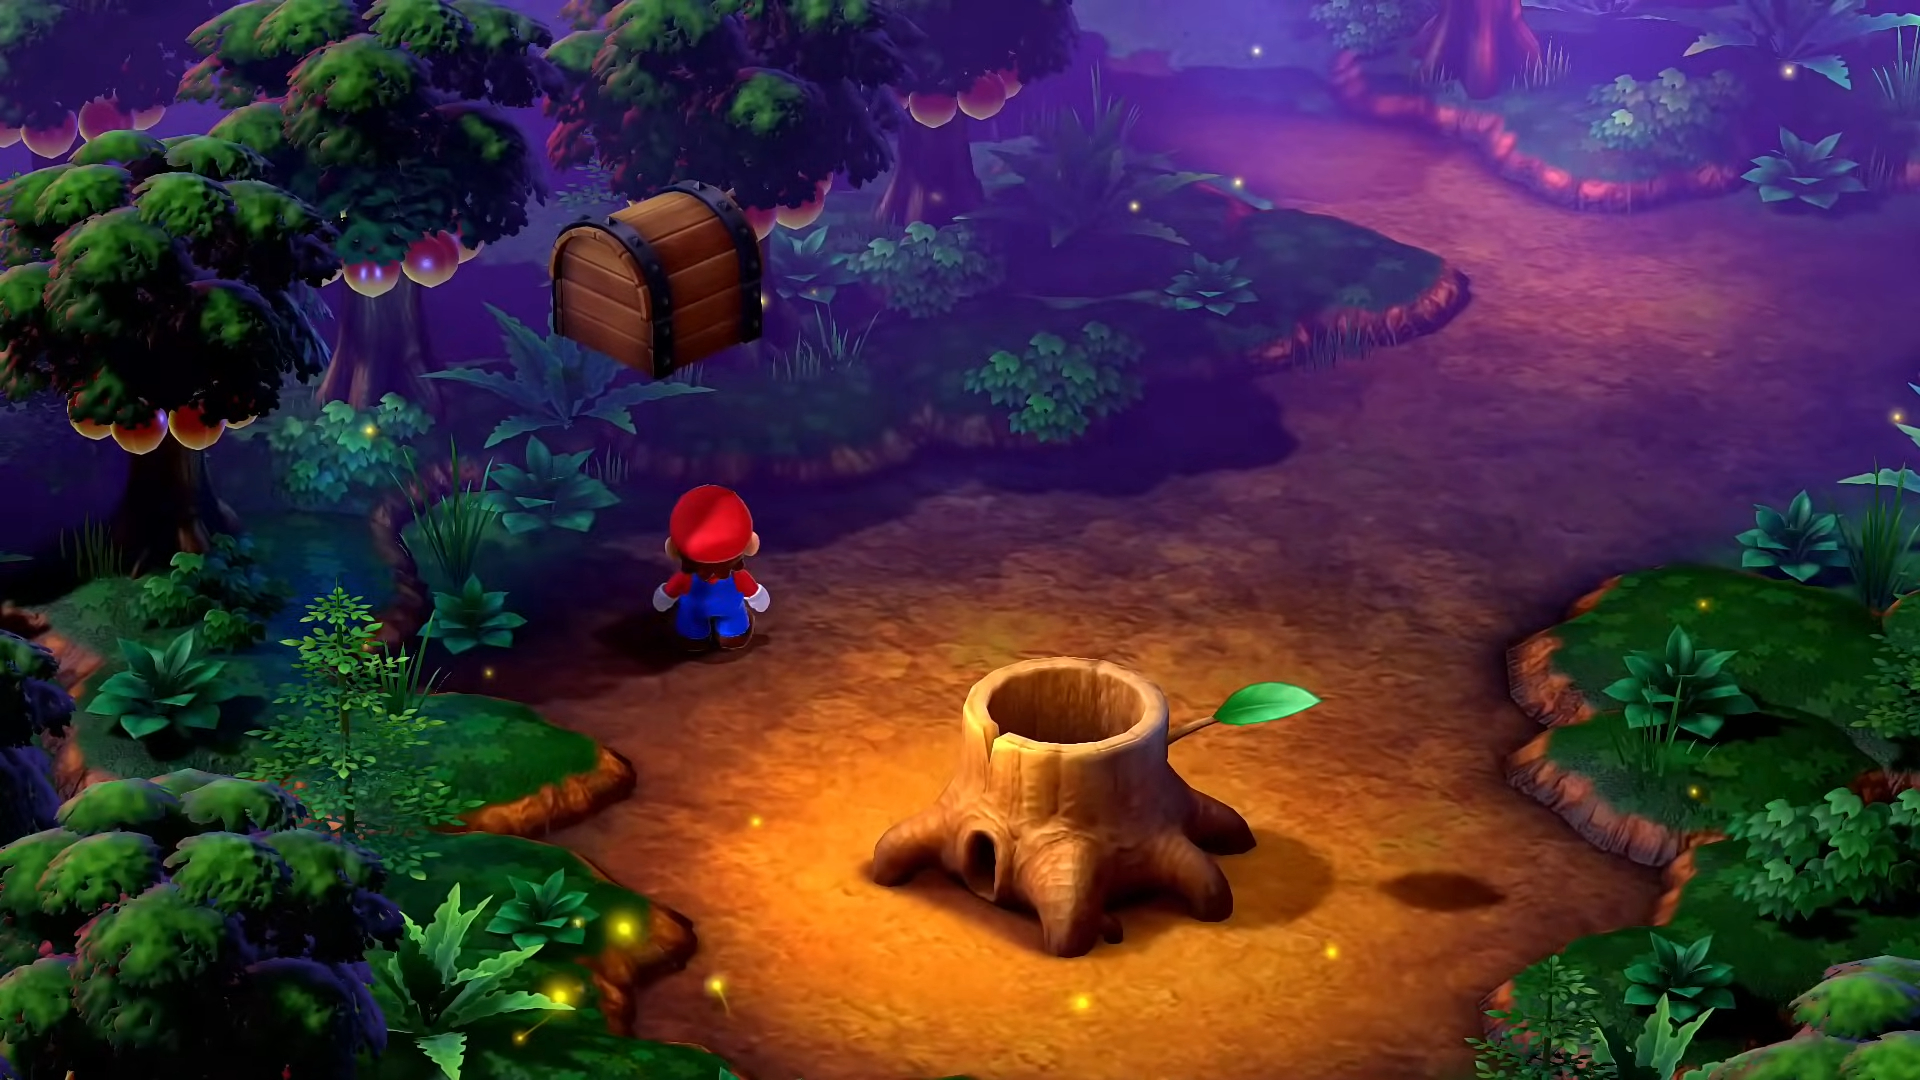 Mario near a stump.